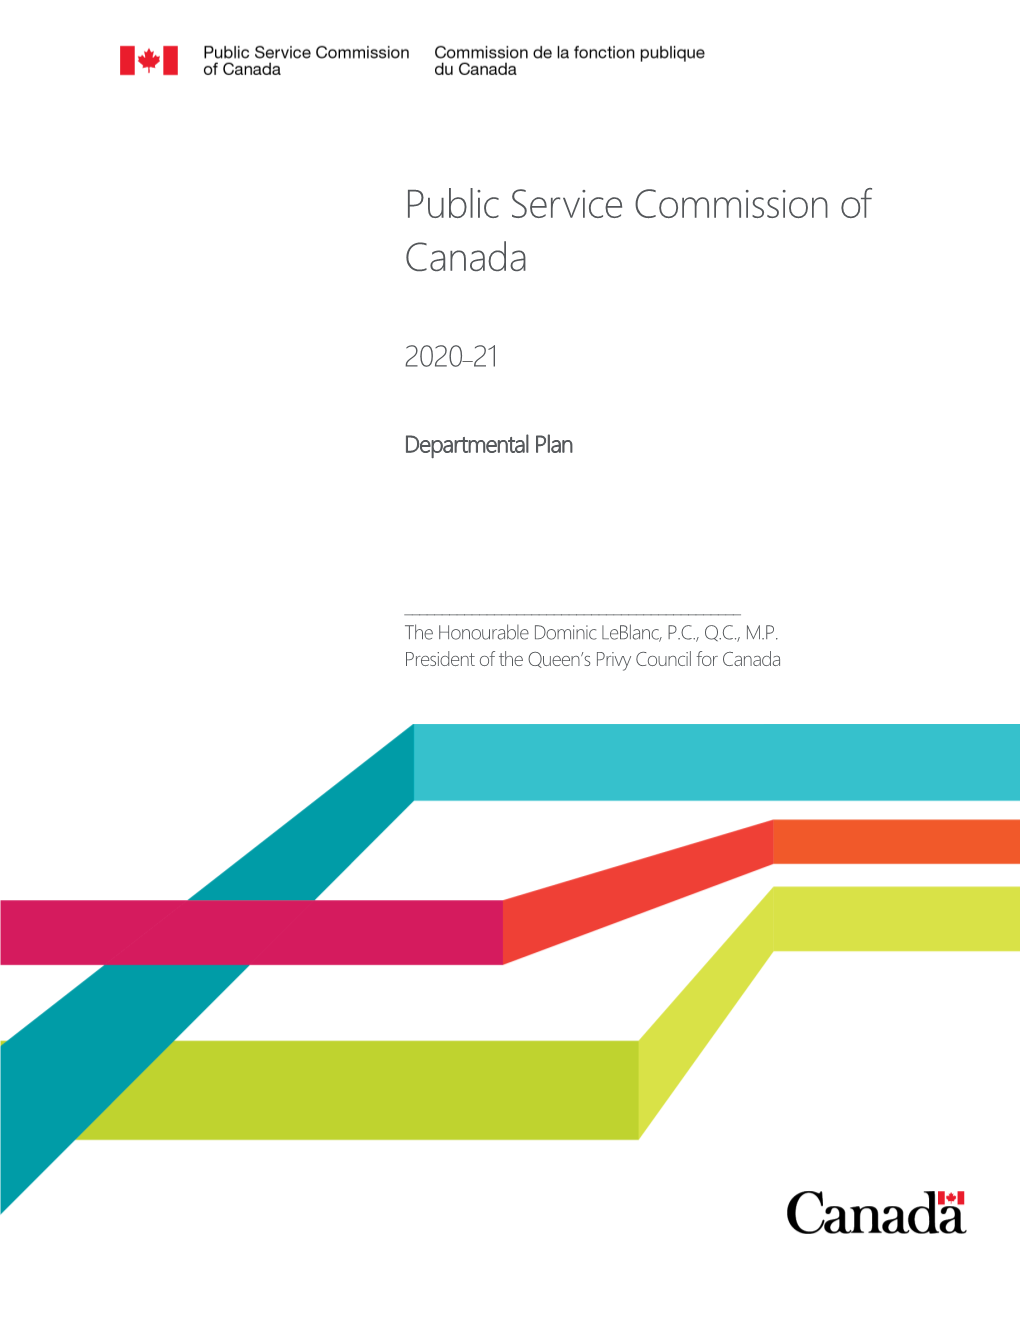 Public Service Commission of Canada